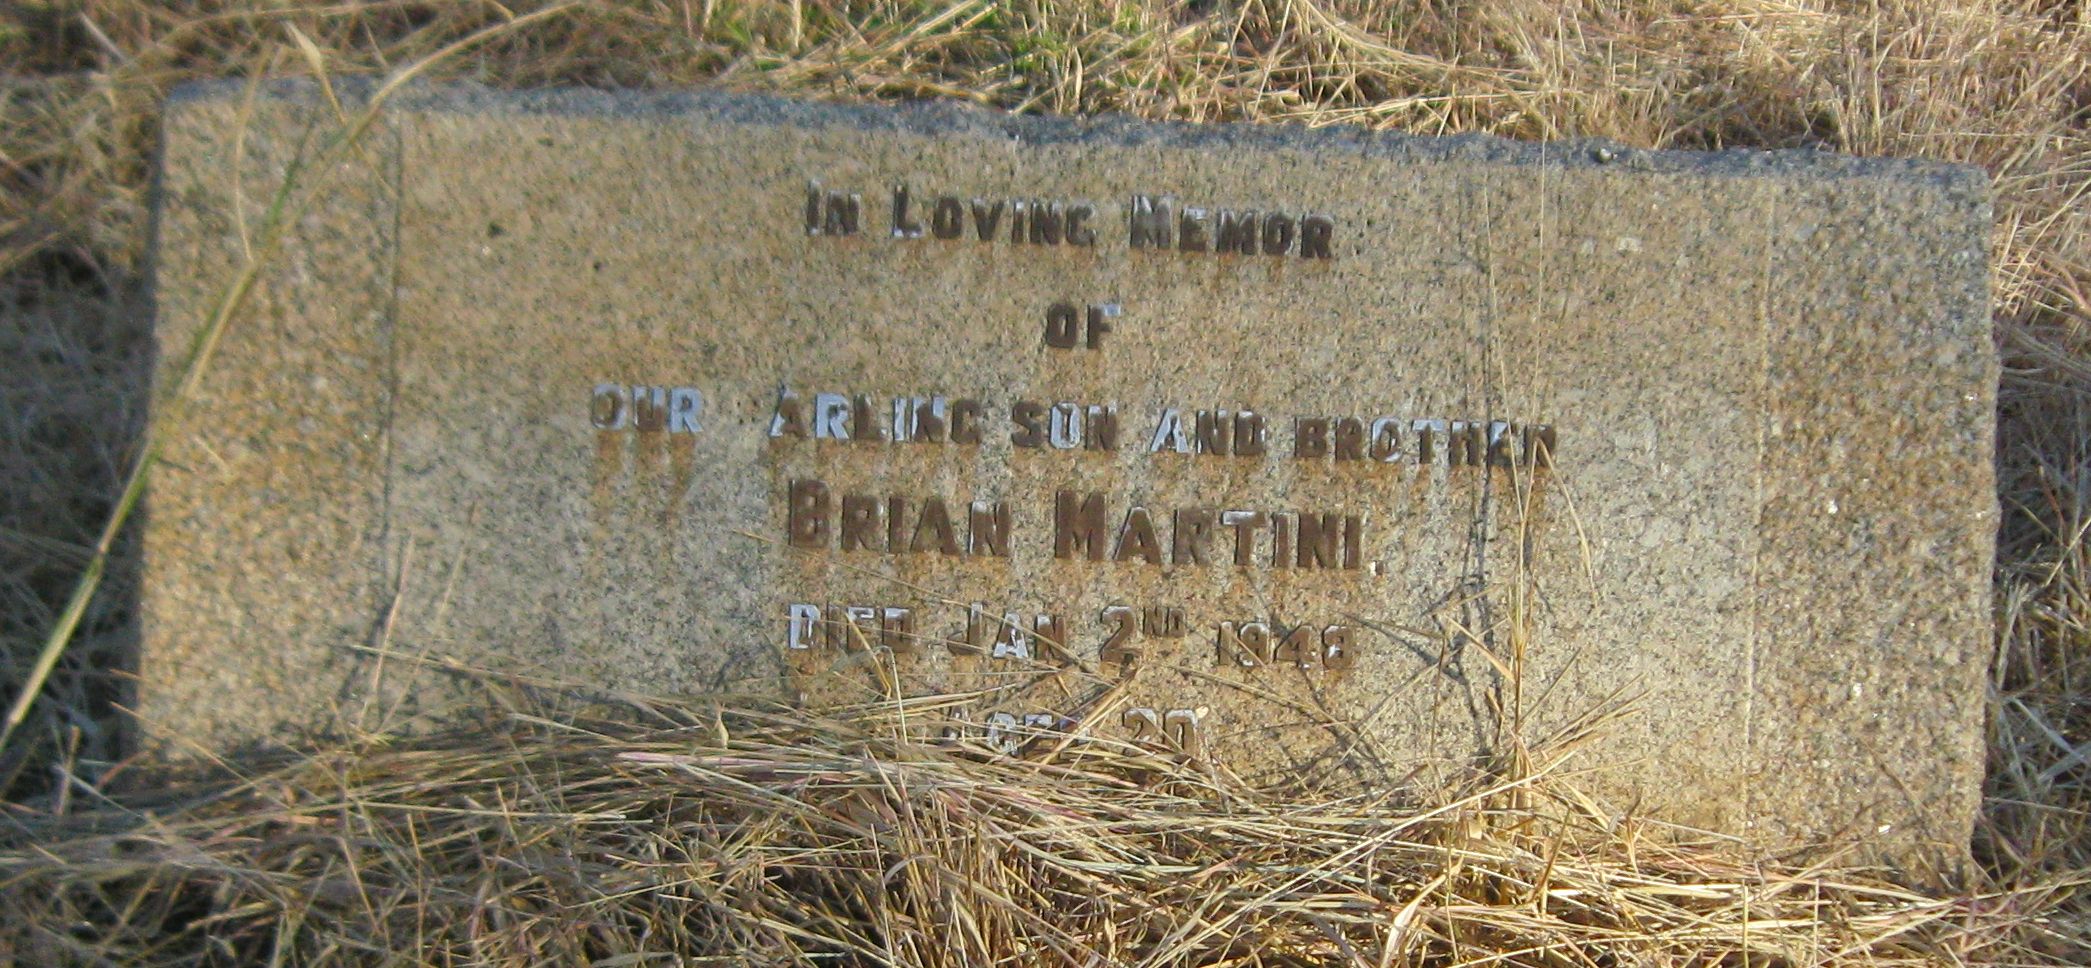 cemeteries_headstone_byo_martini_1948